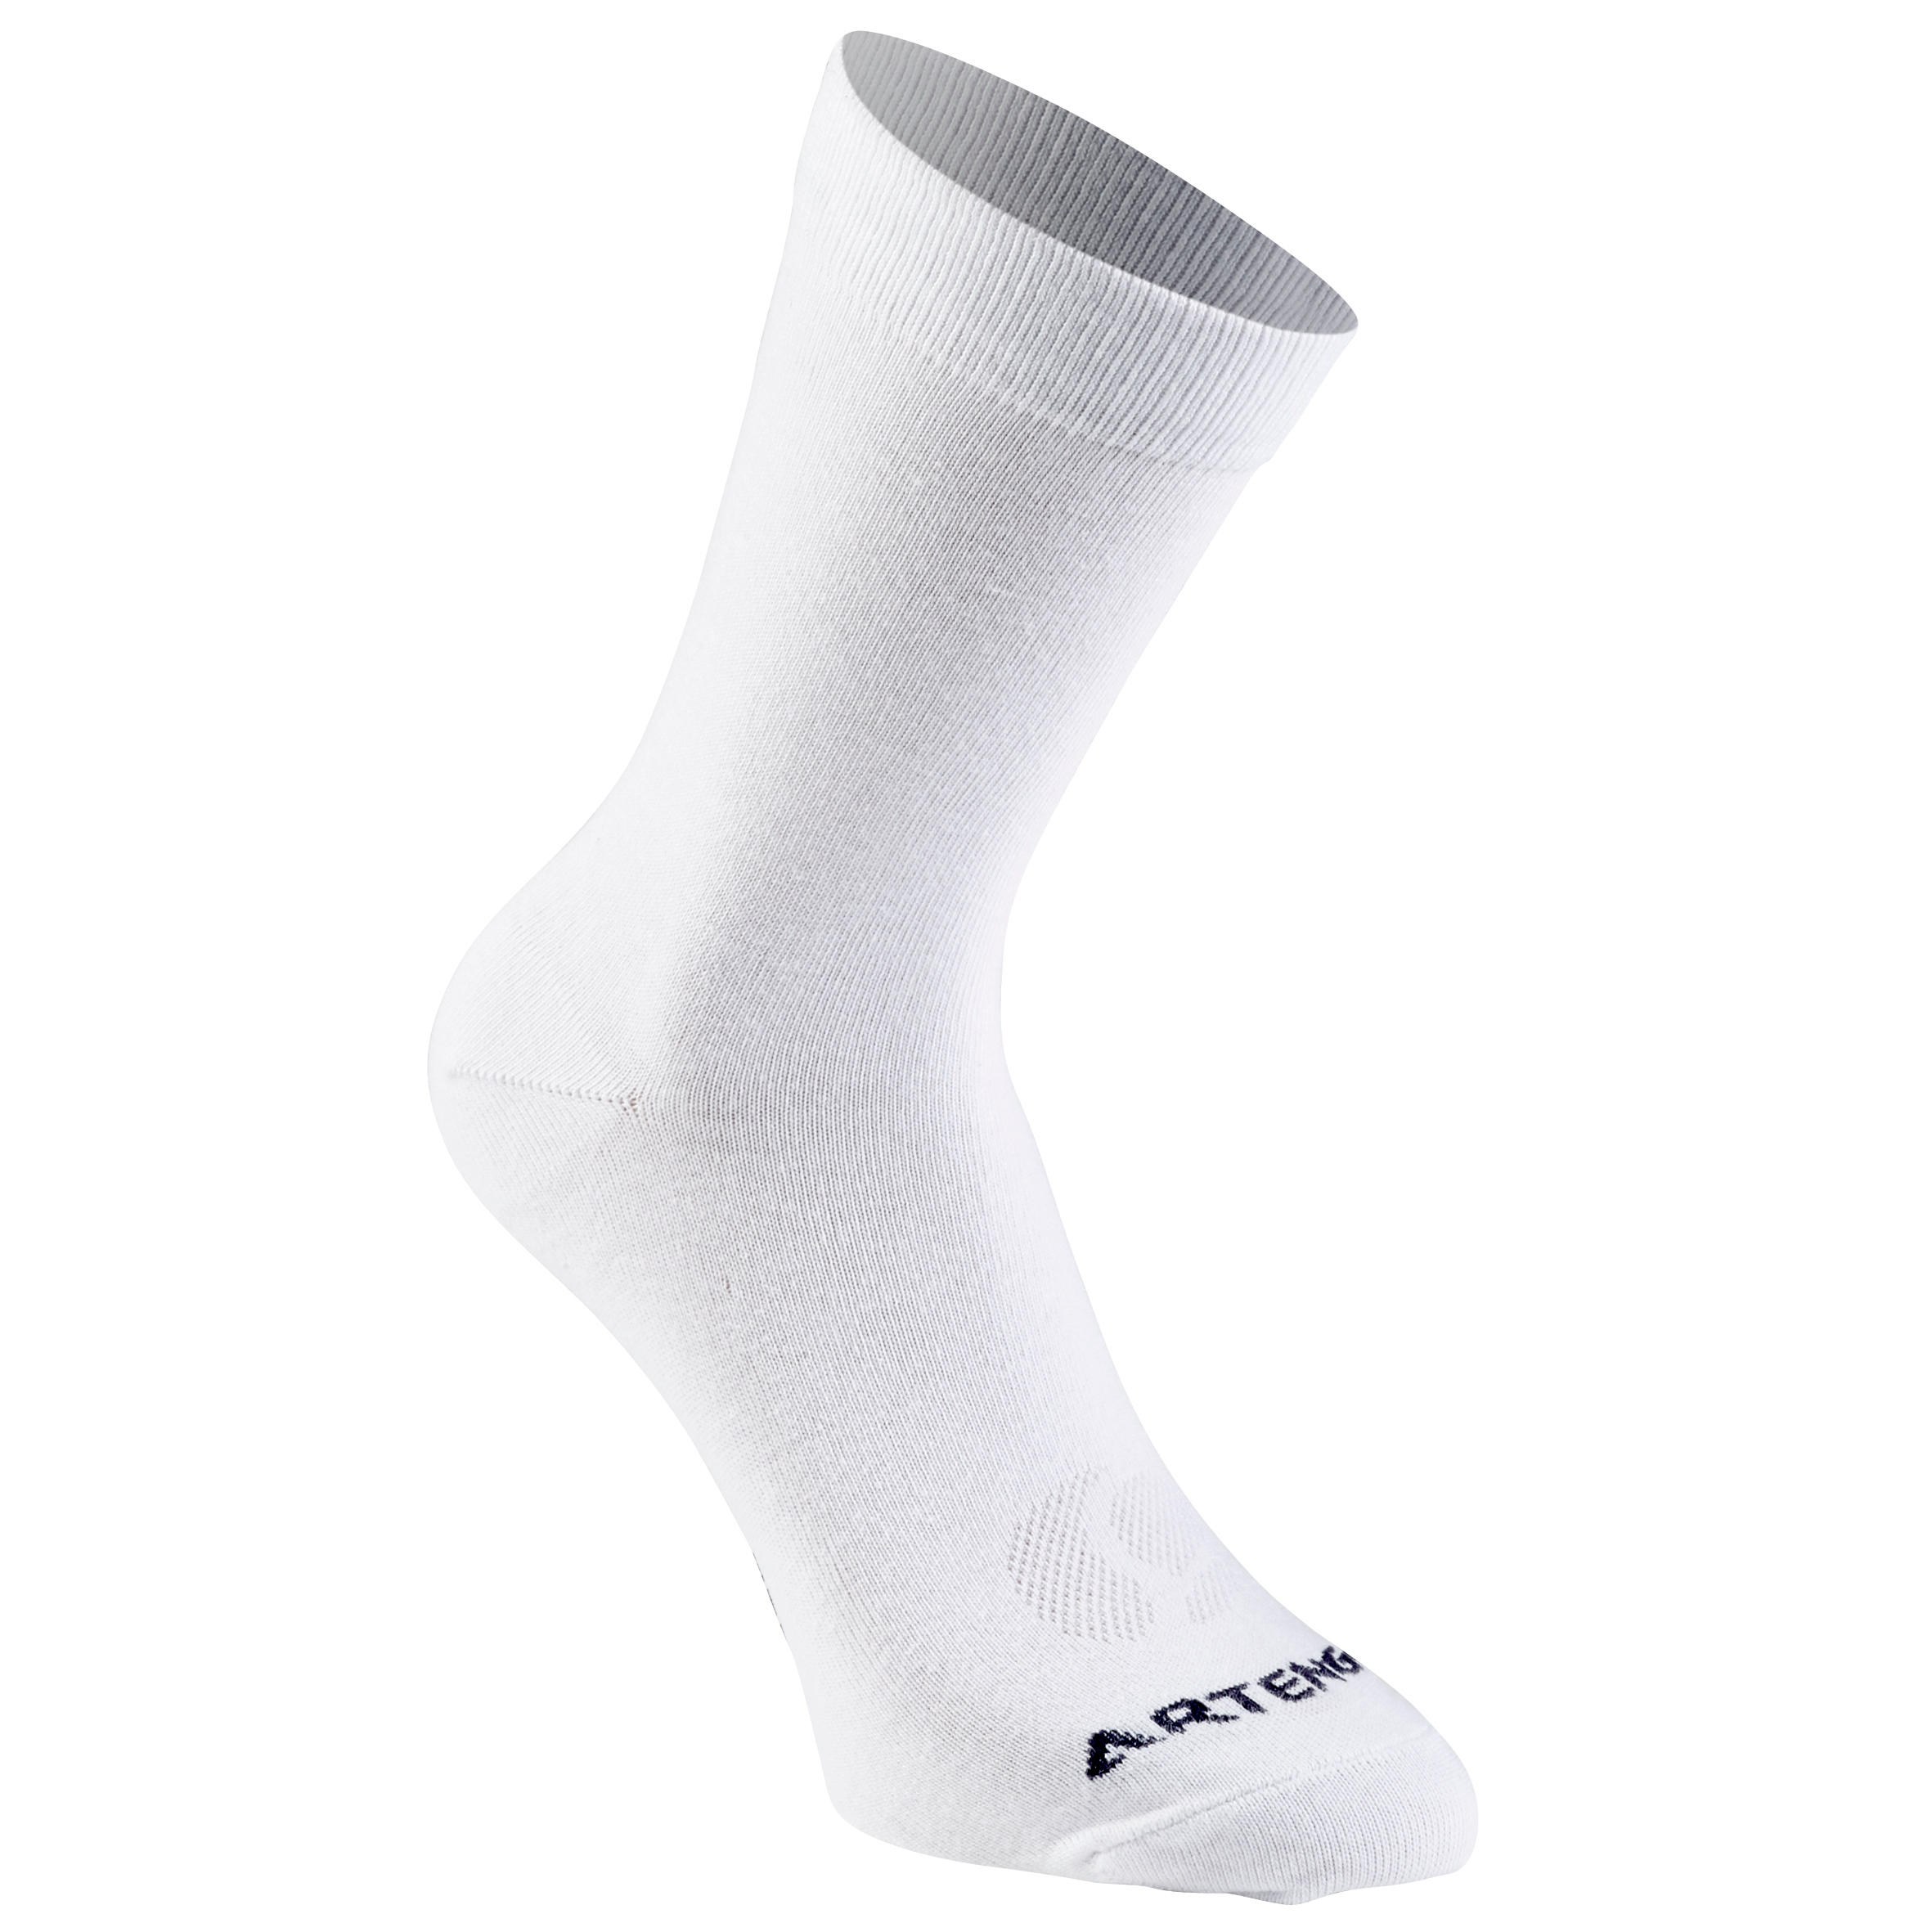 RS 160 Adult High Sports Socks Tri-Pack - White 2/9